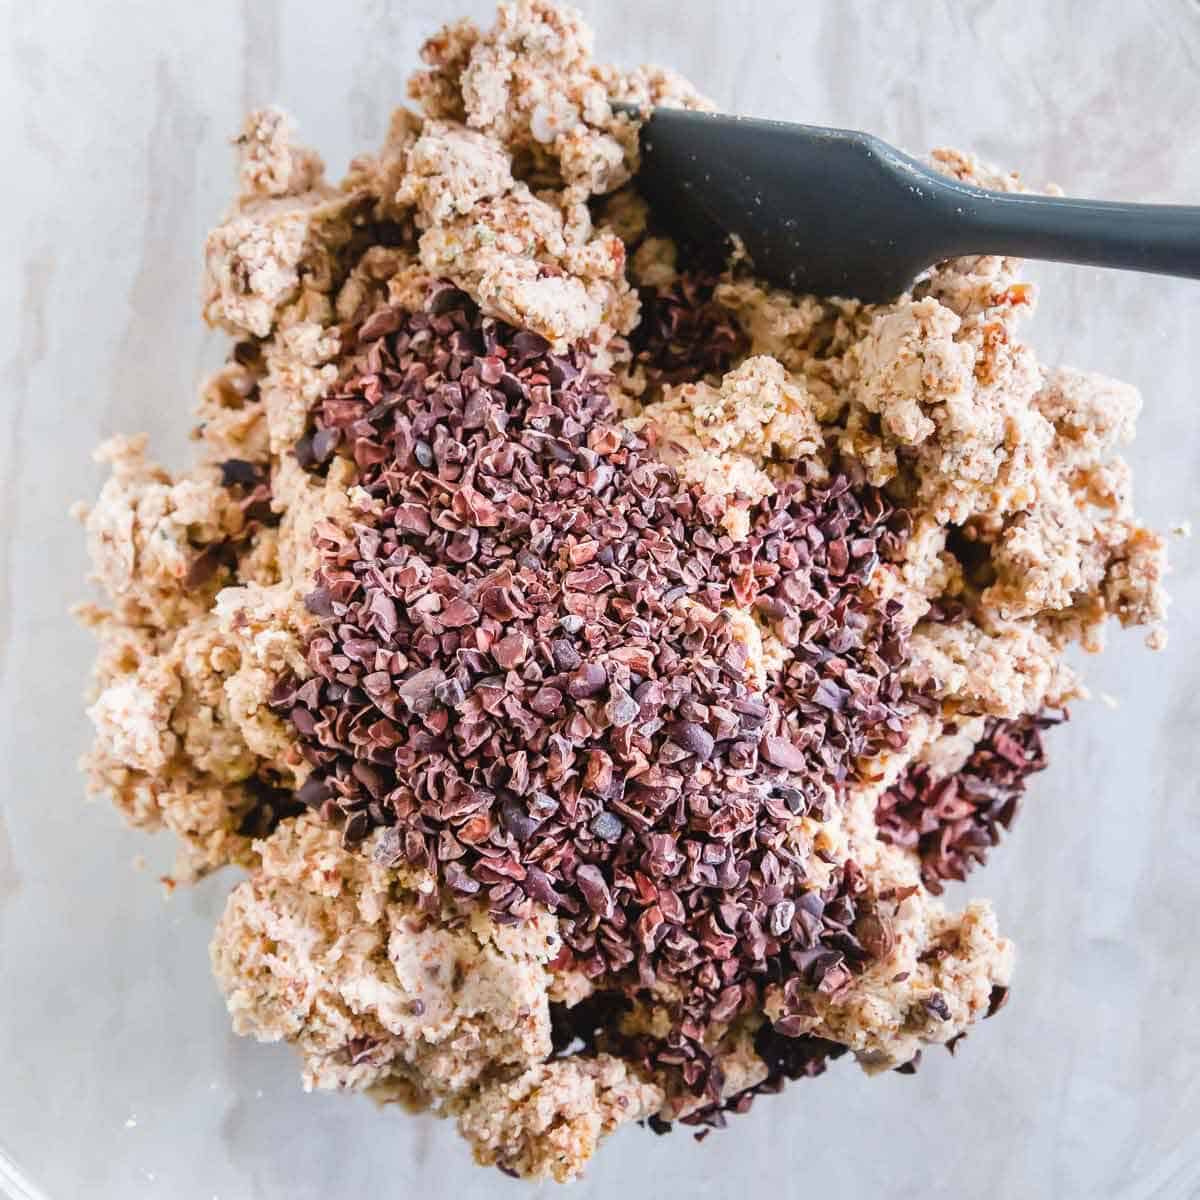 Using almond pulp to make healthier cookie dough bites